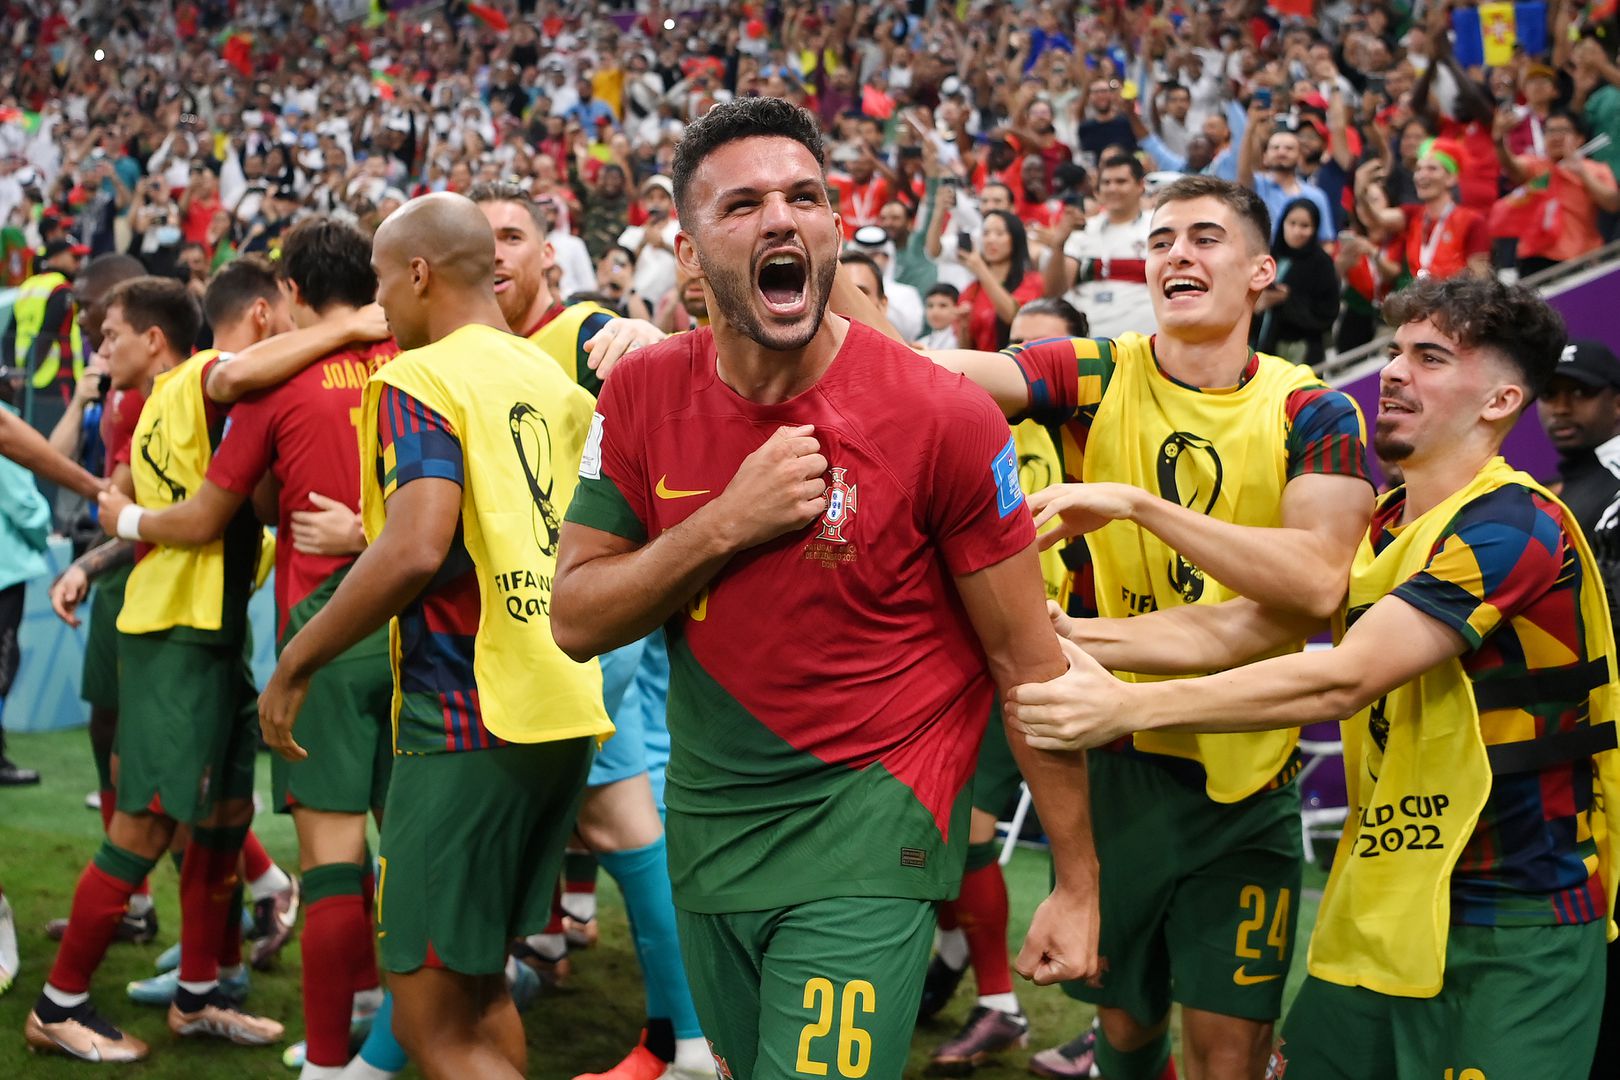  Португалия - Швейцария, 1/8-финал на Мондиал 2022 